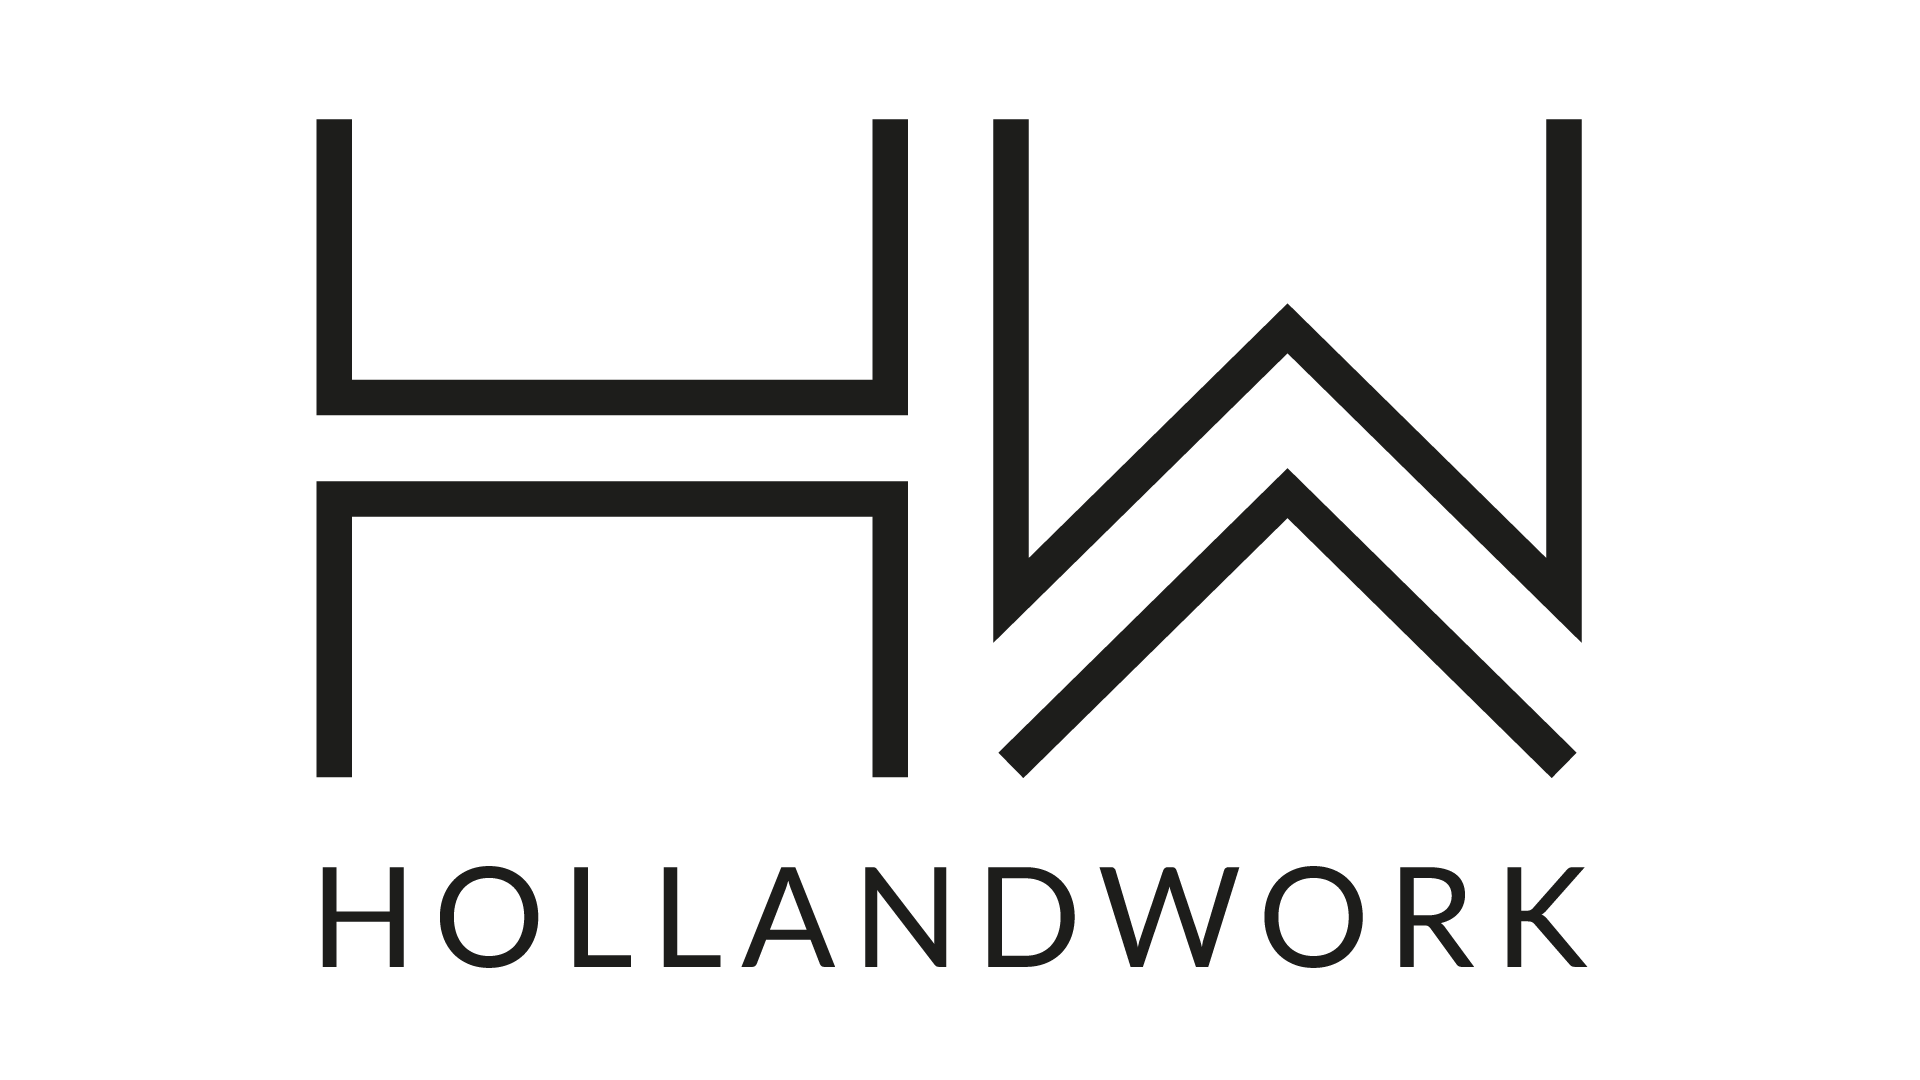 A HollandWork